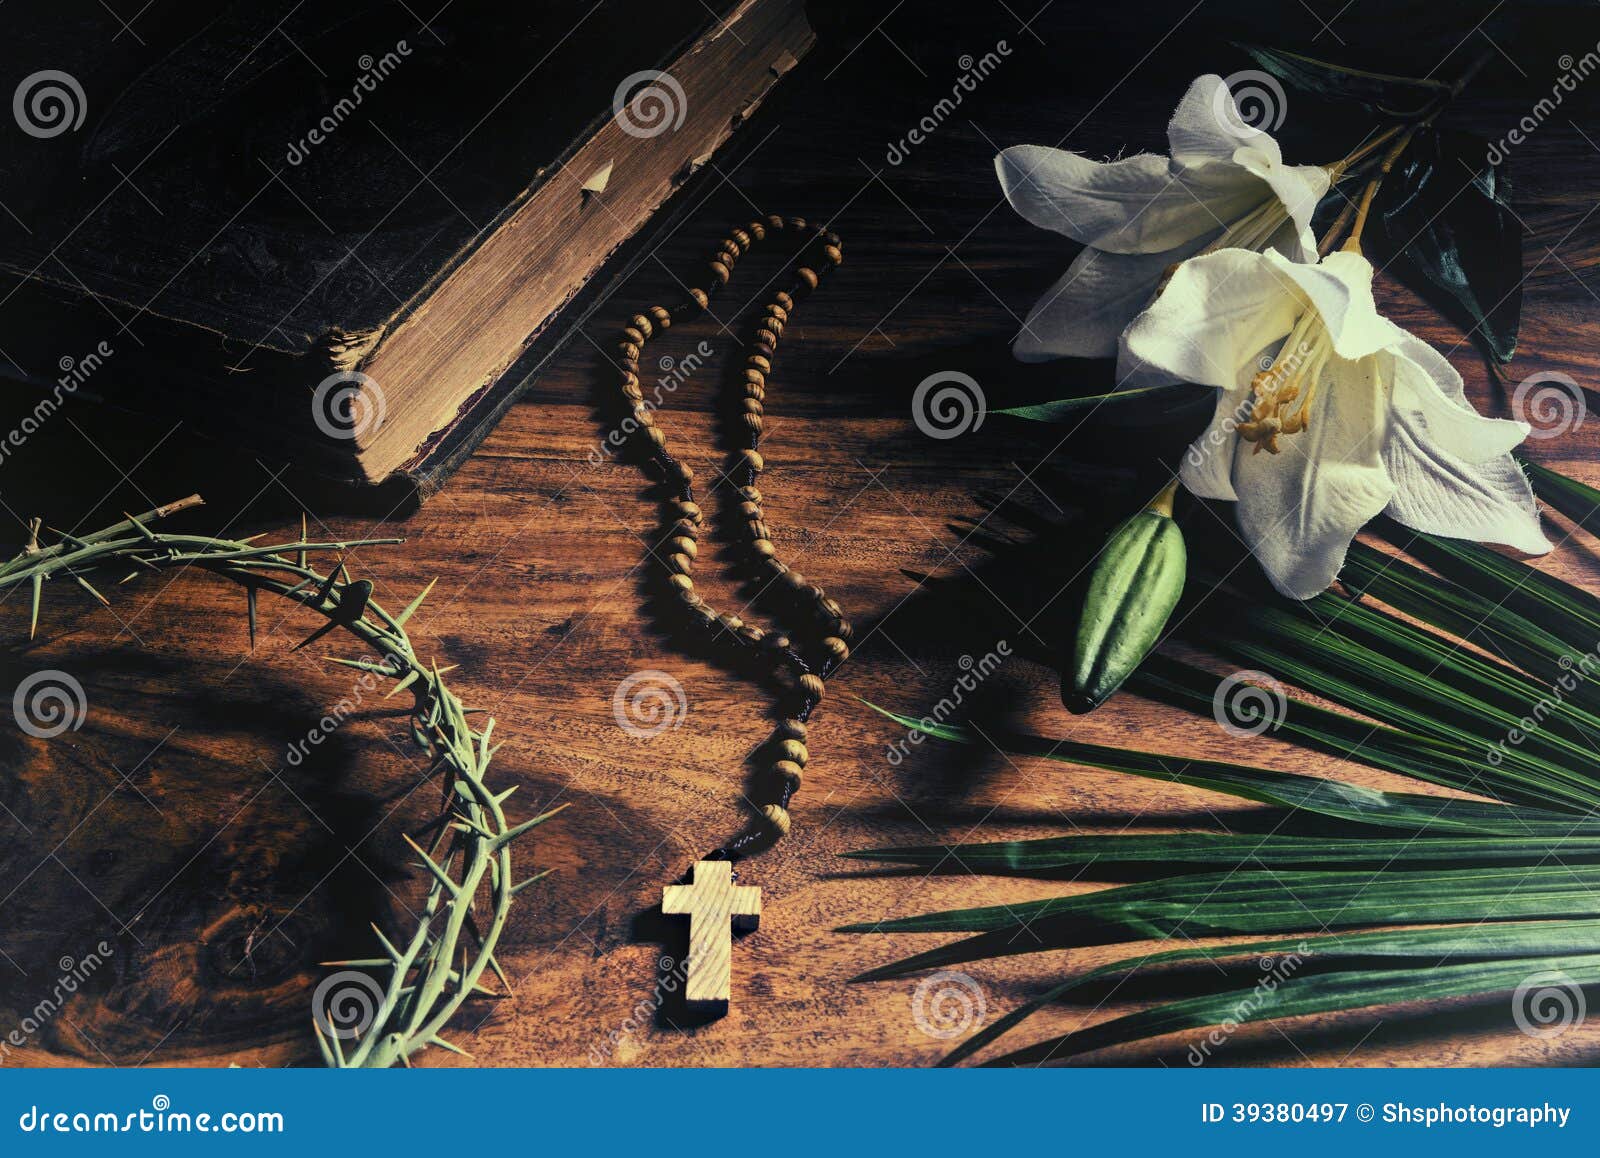 triumph - passion - crucifixion - resurrection